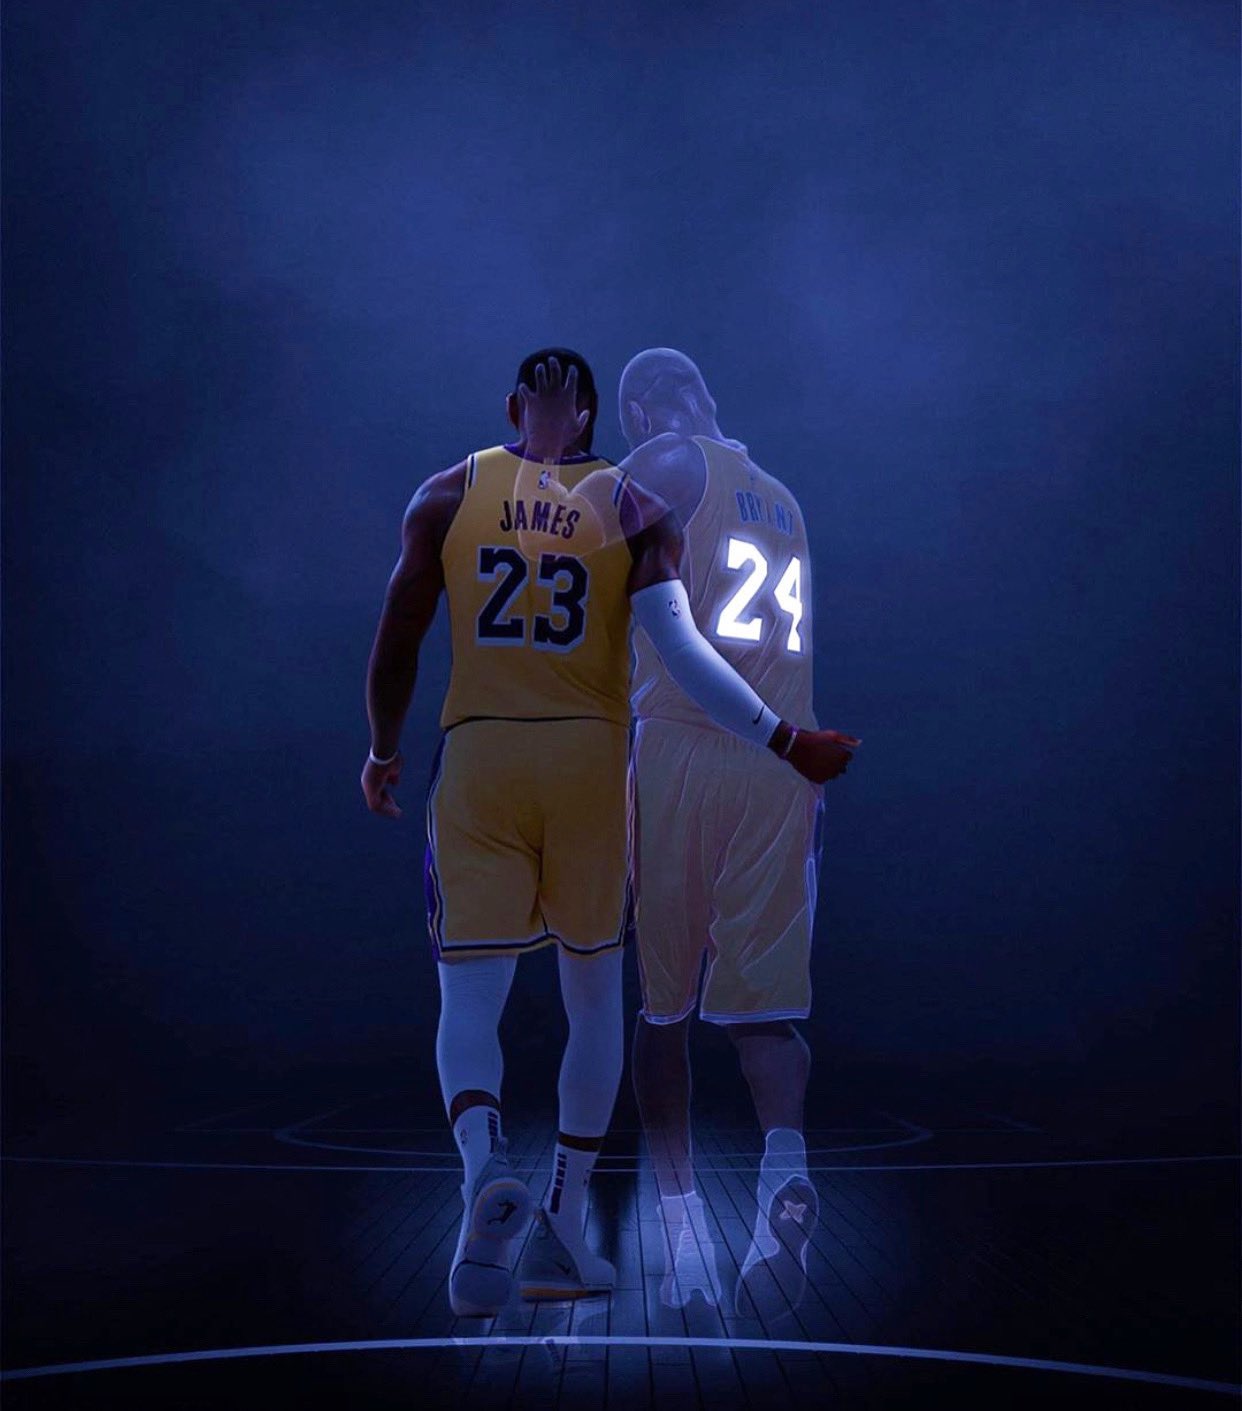 Los Angeles Lakers NBA Champions 2020 wallpaper